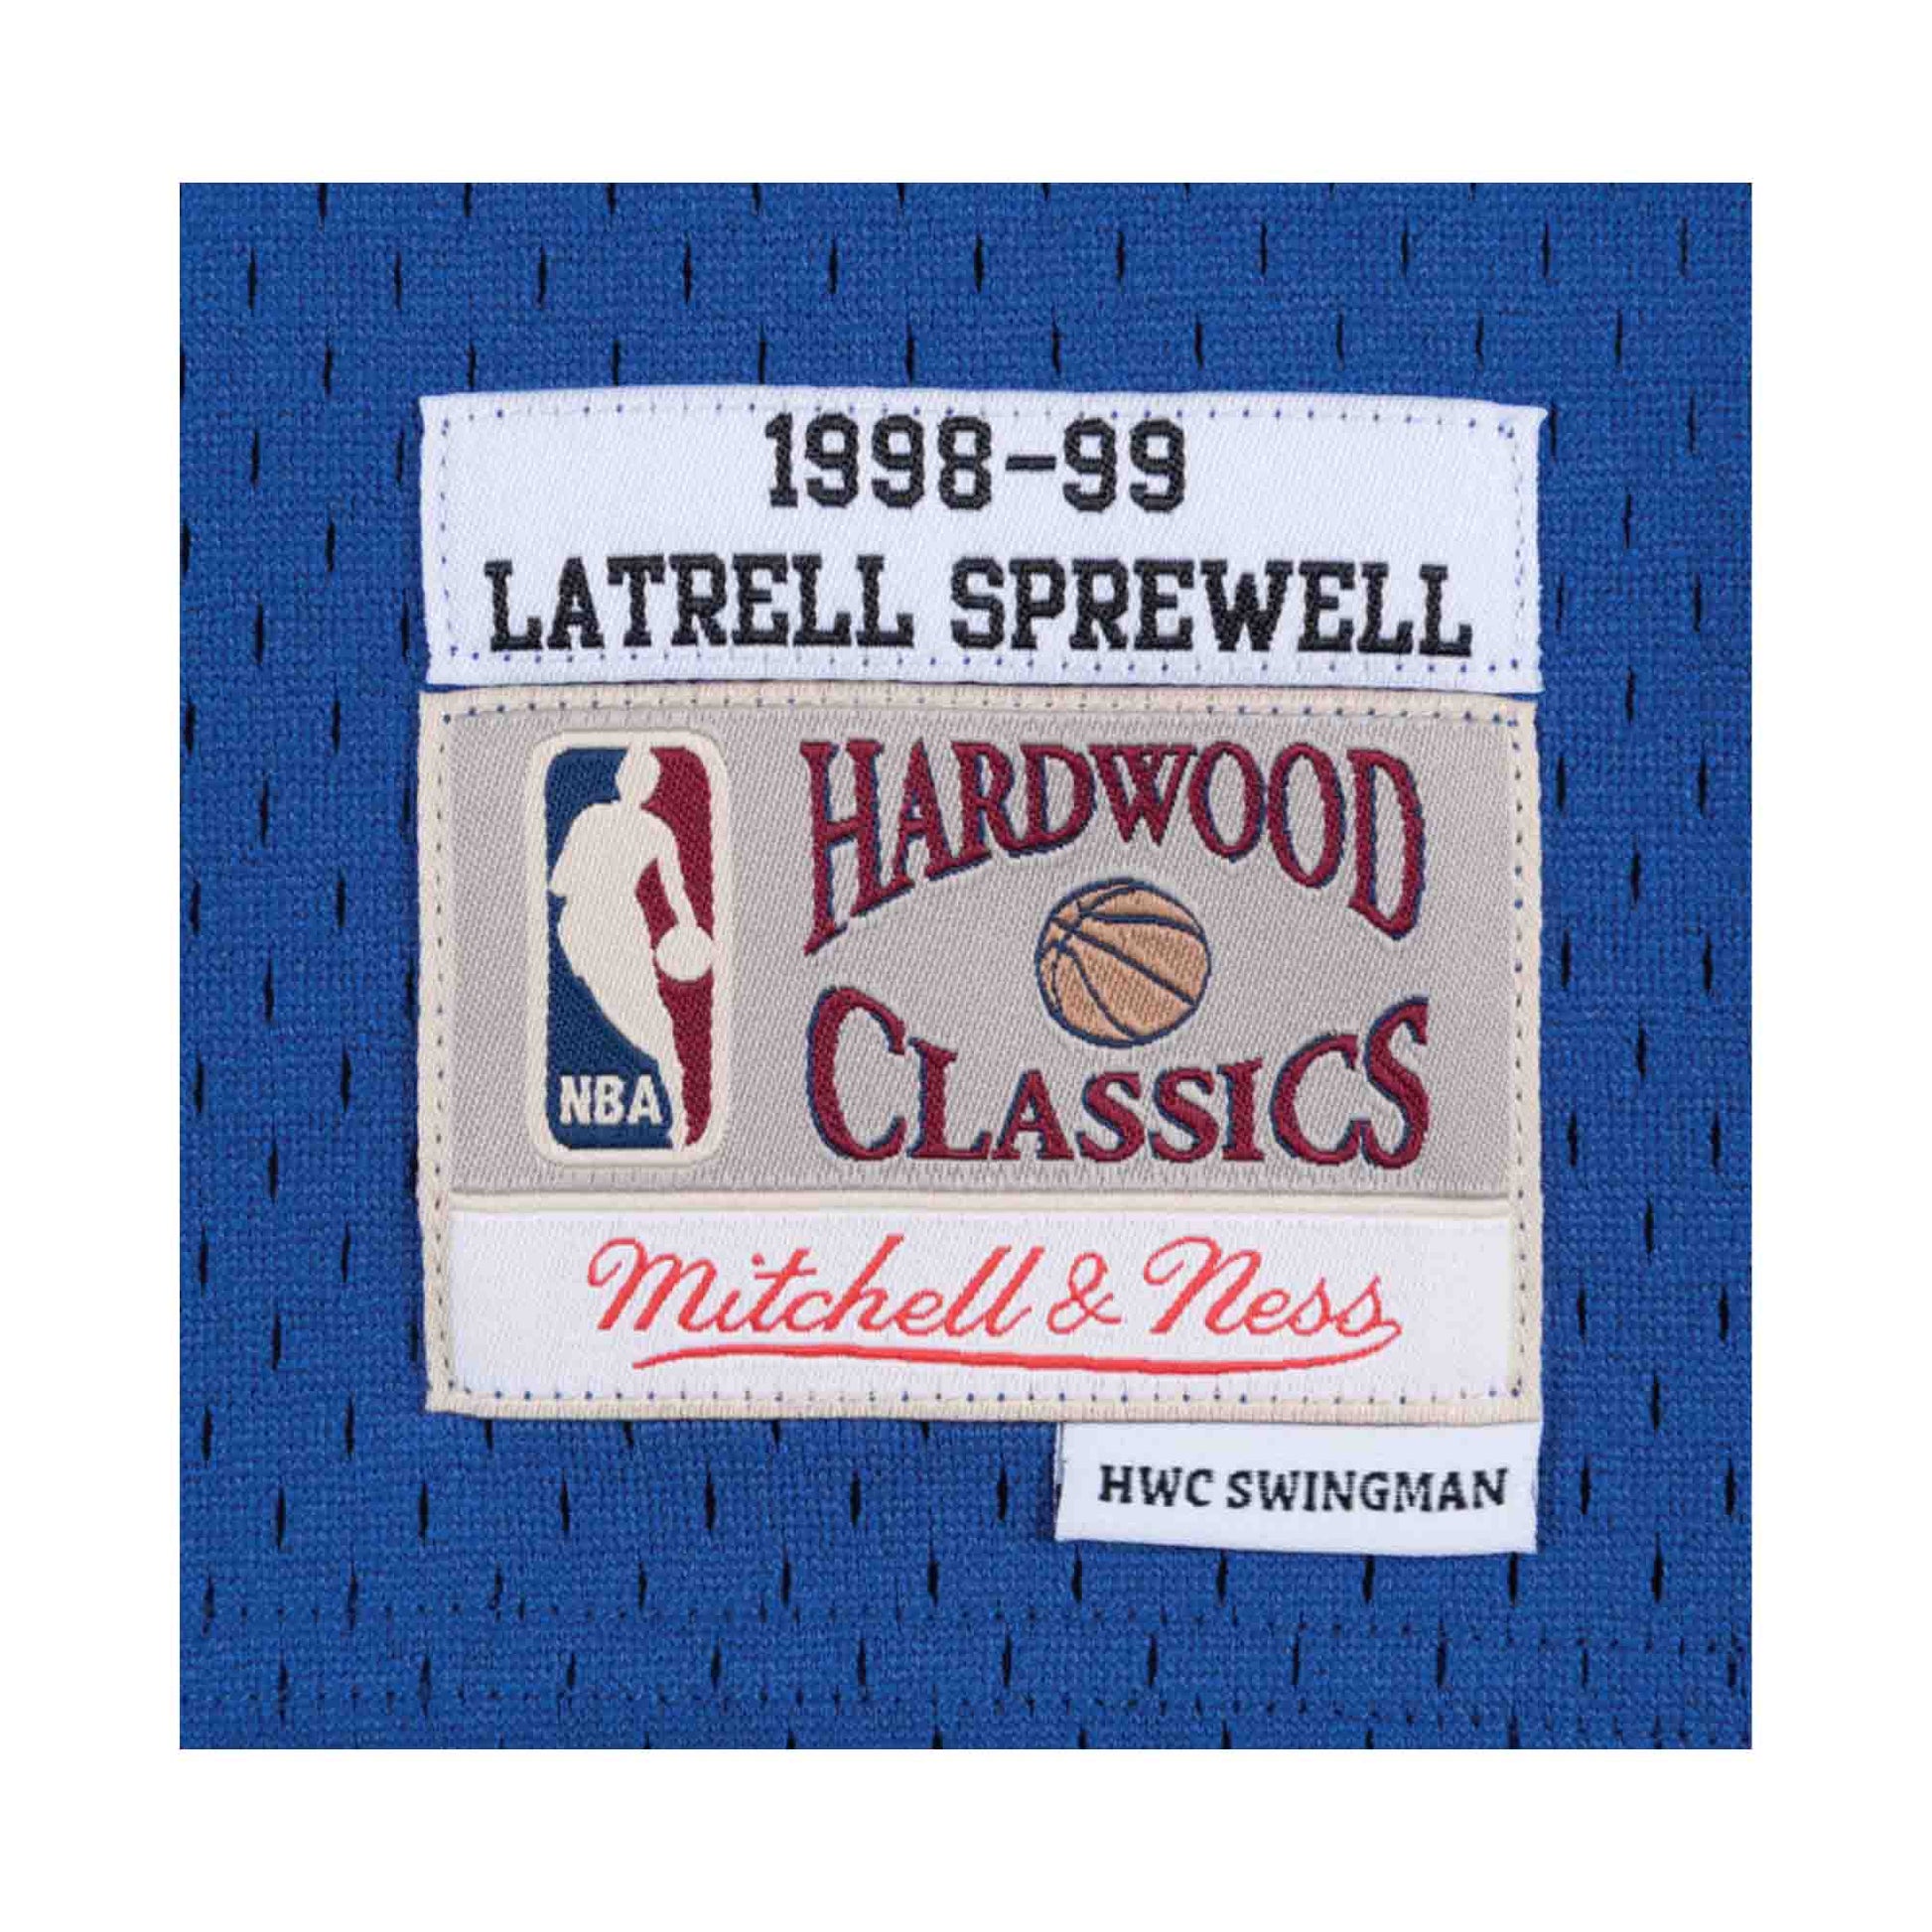 1999 NBA Finals New York Knicks Latrell Sprewell Authentic Jersey –  FibaManiac